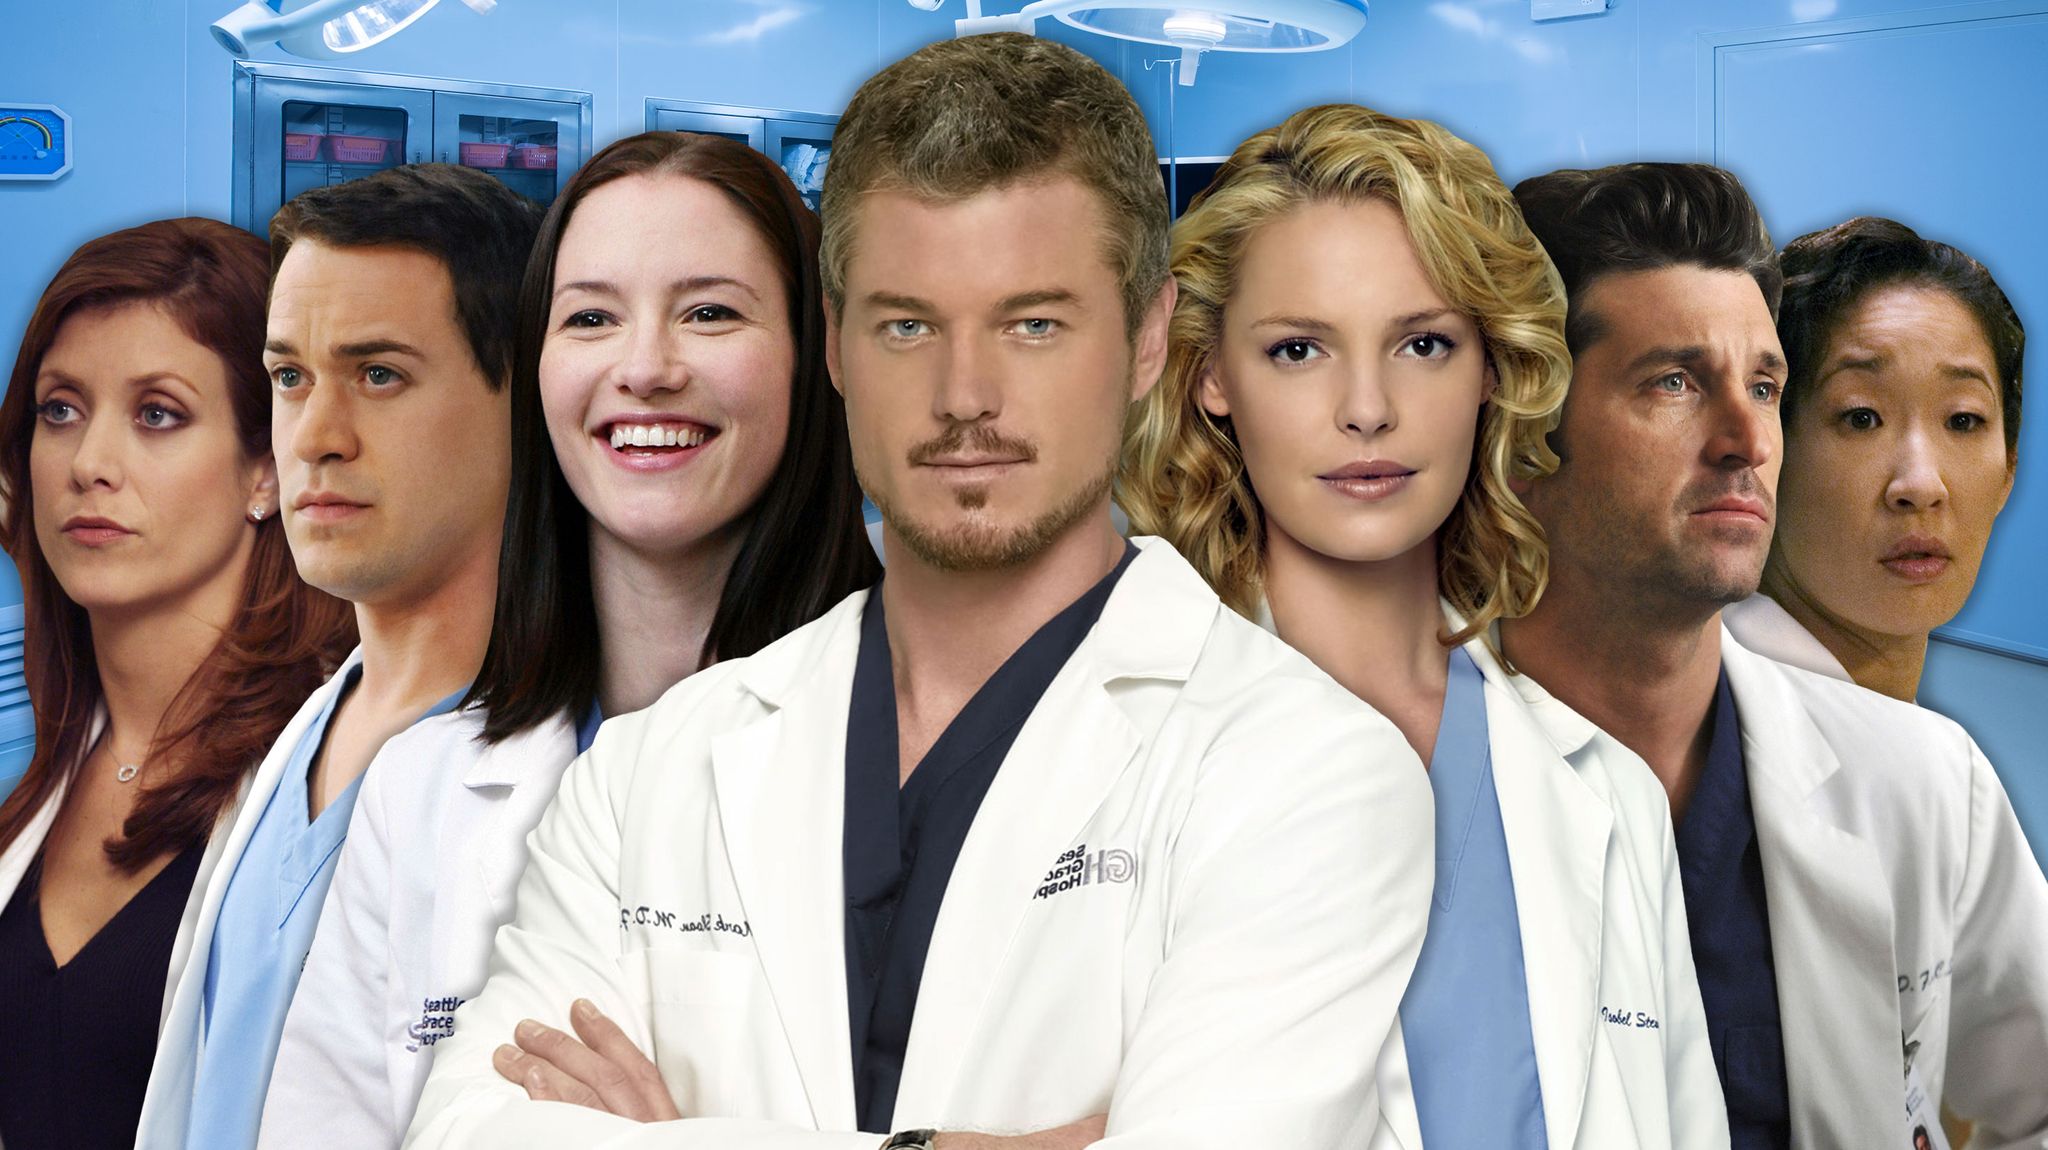 Grey's Anatomy Season 20 A Nostalgic Return Sparks Excitement Among Fans